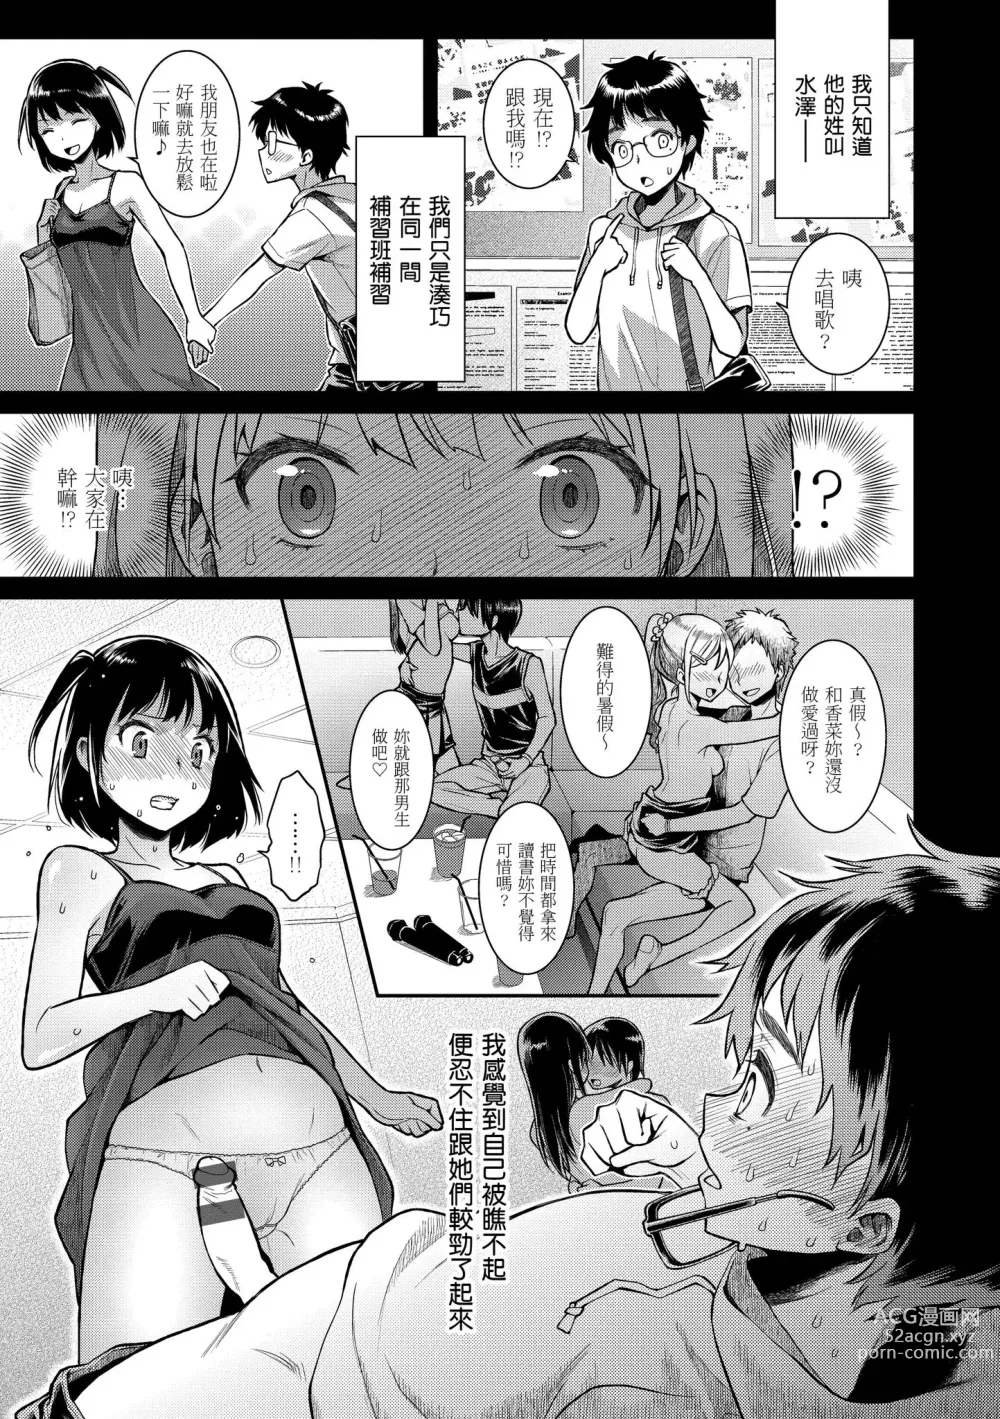 Page 9 of manga 放蕩甜心